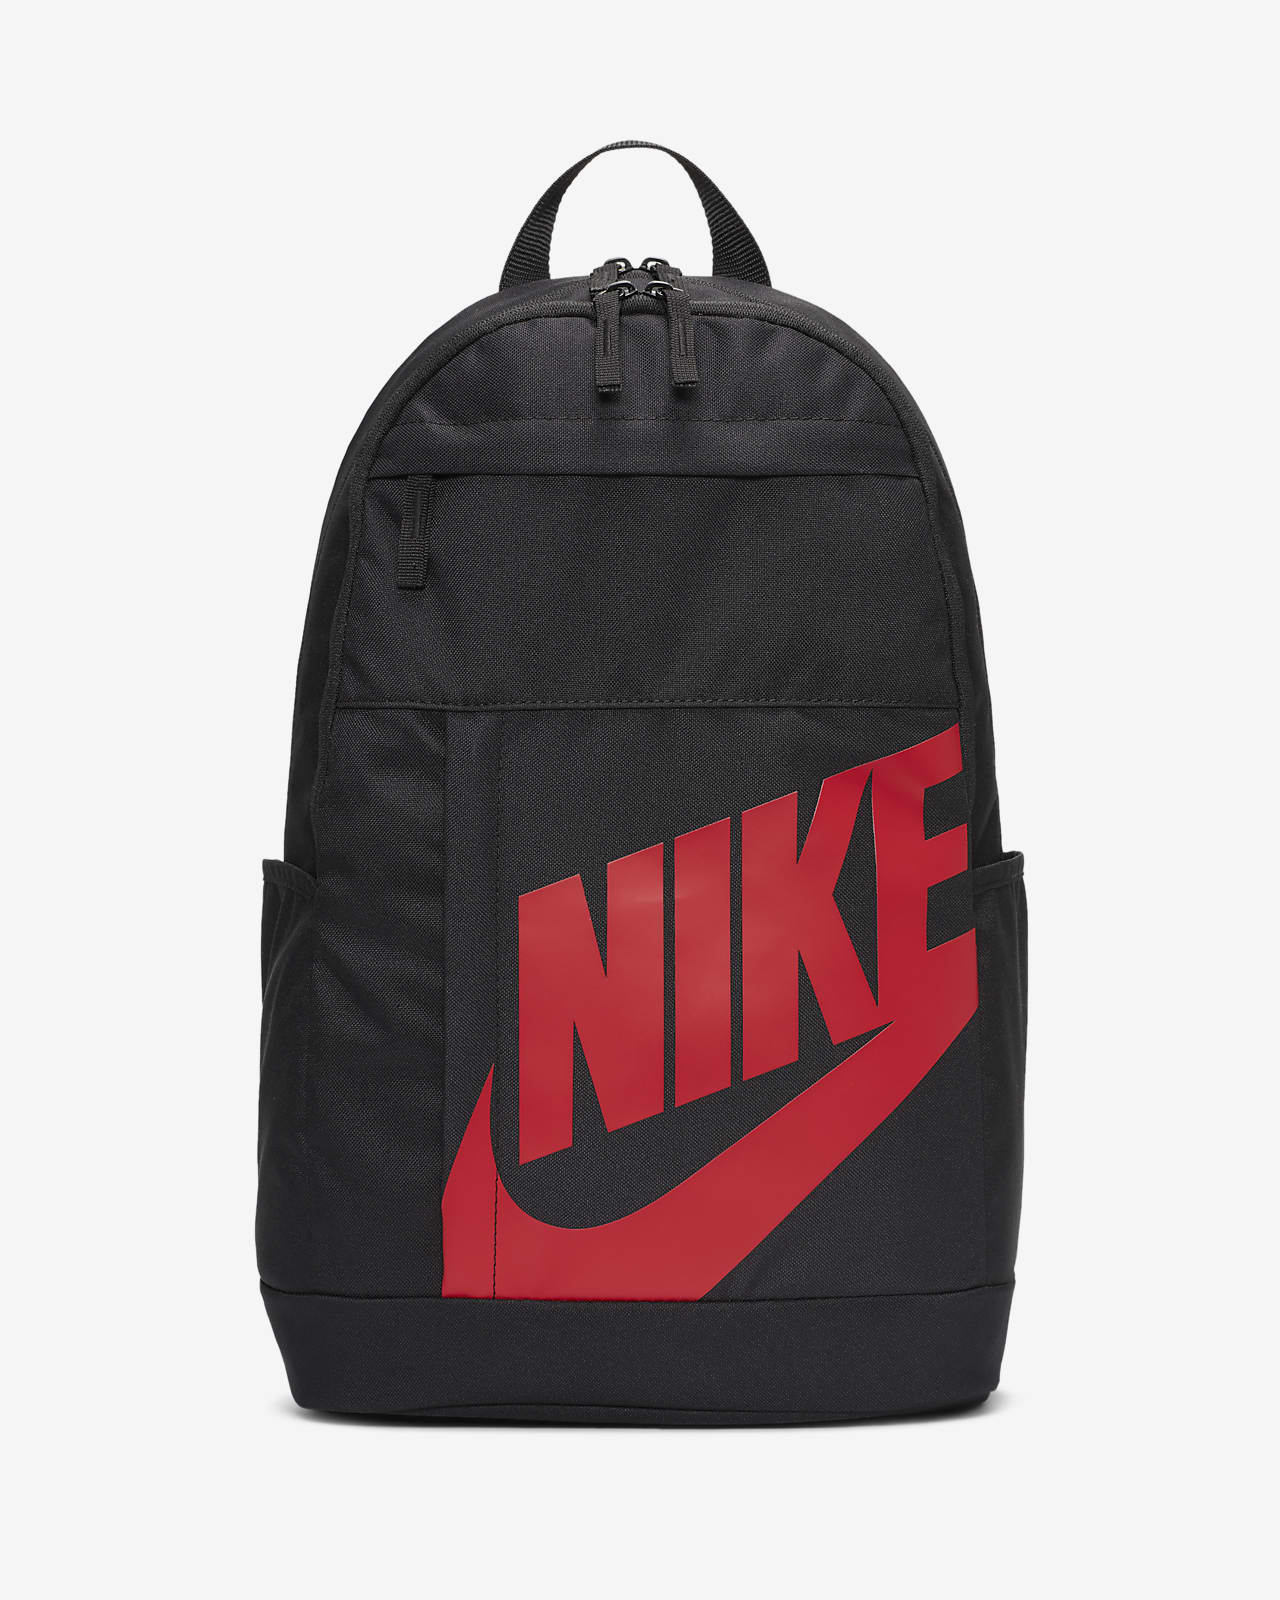 Nike Elemental Backpack Red And Black | NAR Media Kit